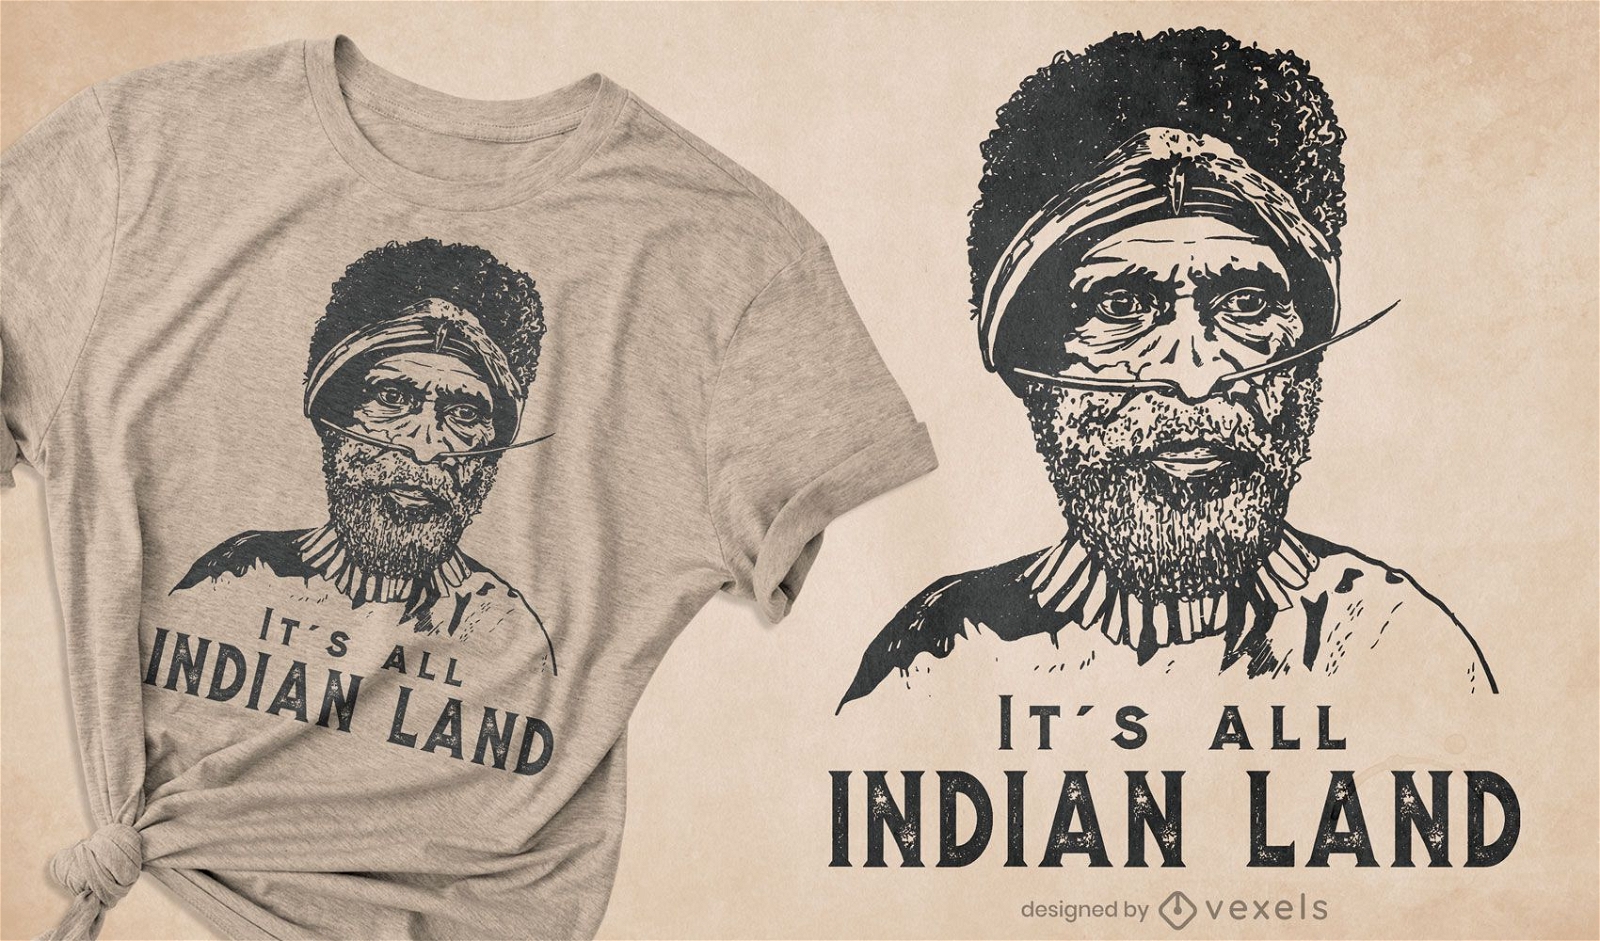 Its all Indian land t-shirt design